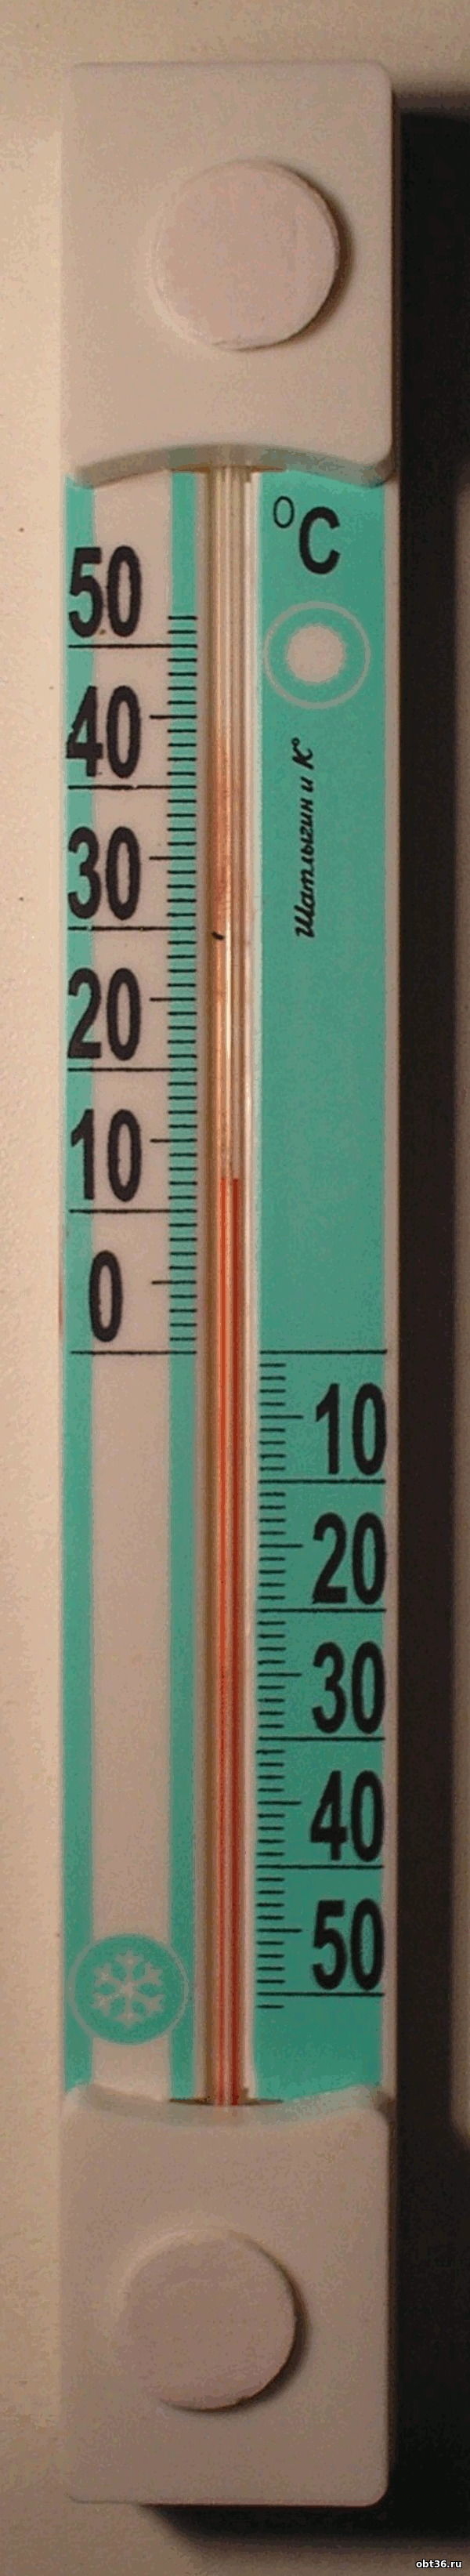 термометр то-3 г.харьков